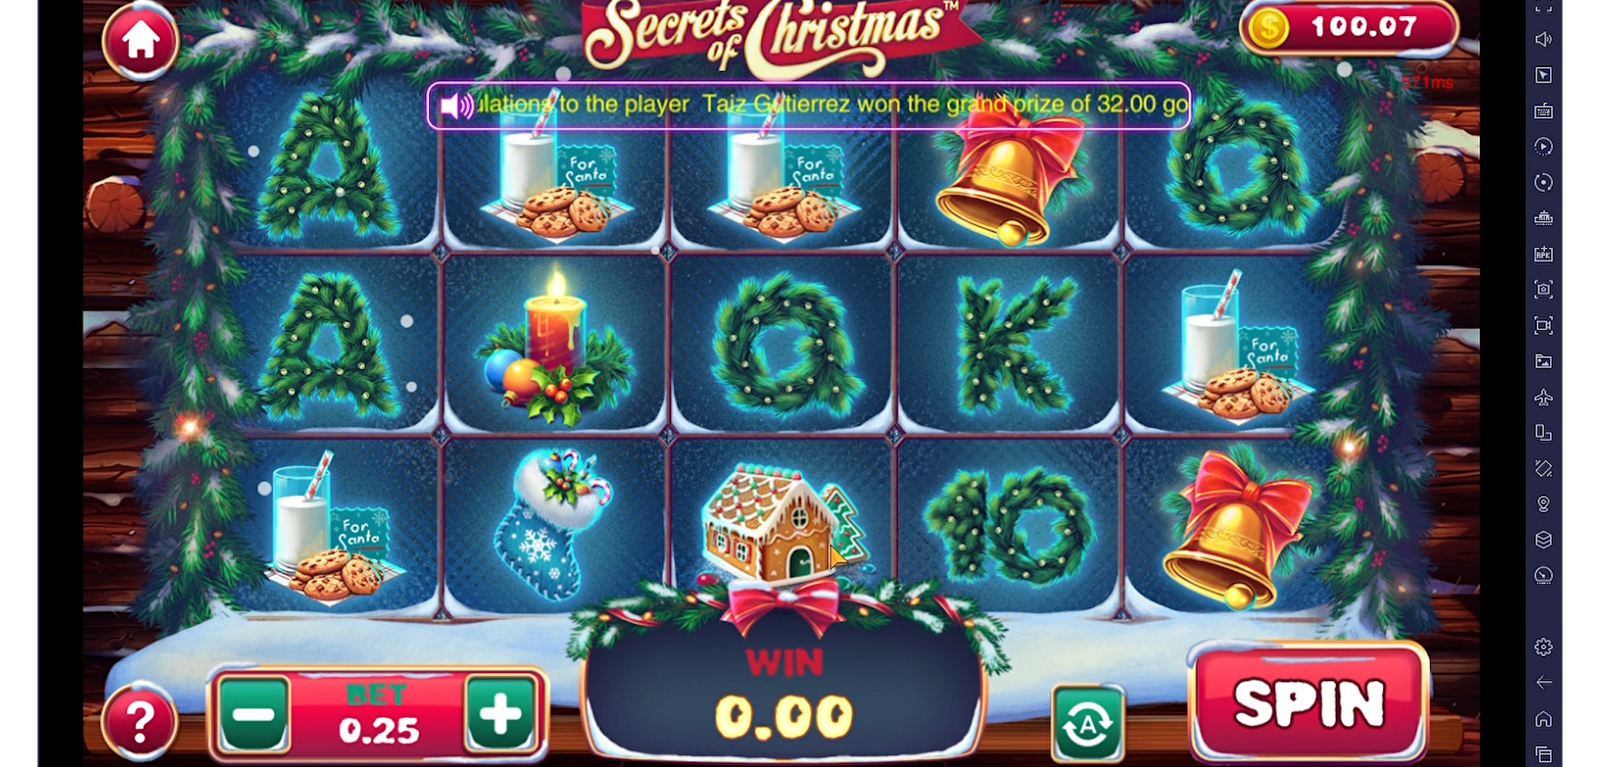 Secrets of Christmas 4